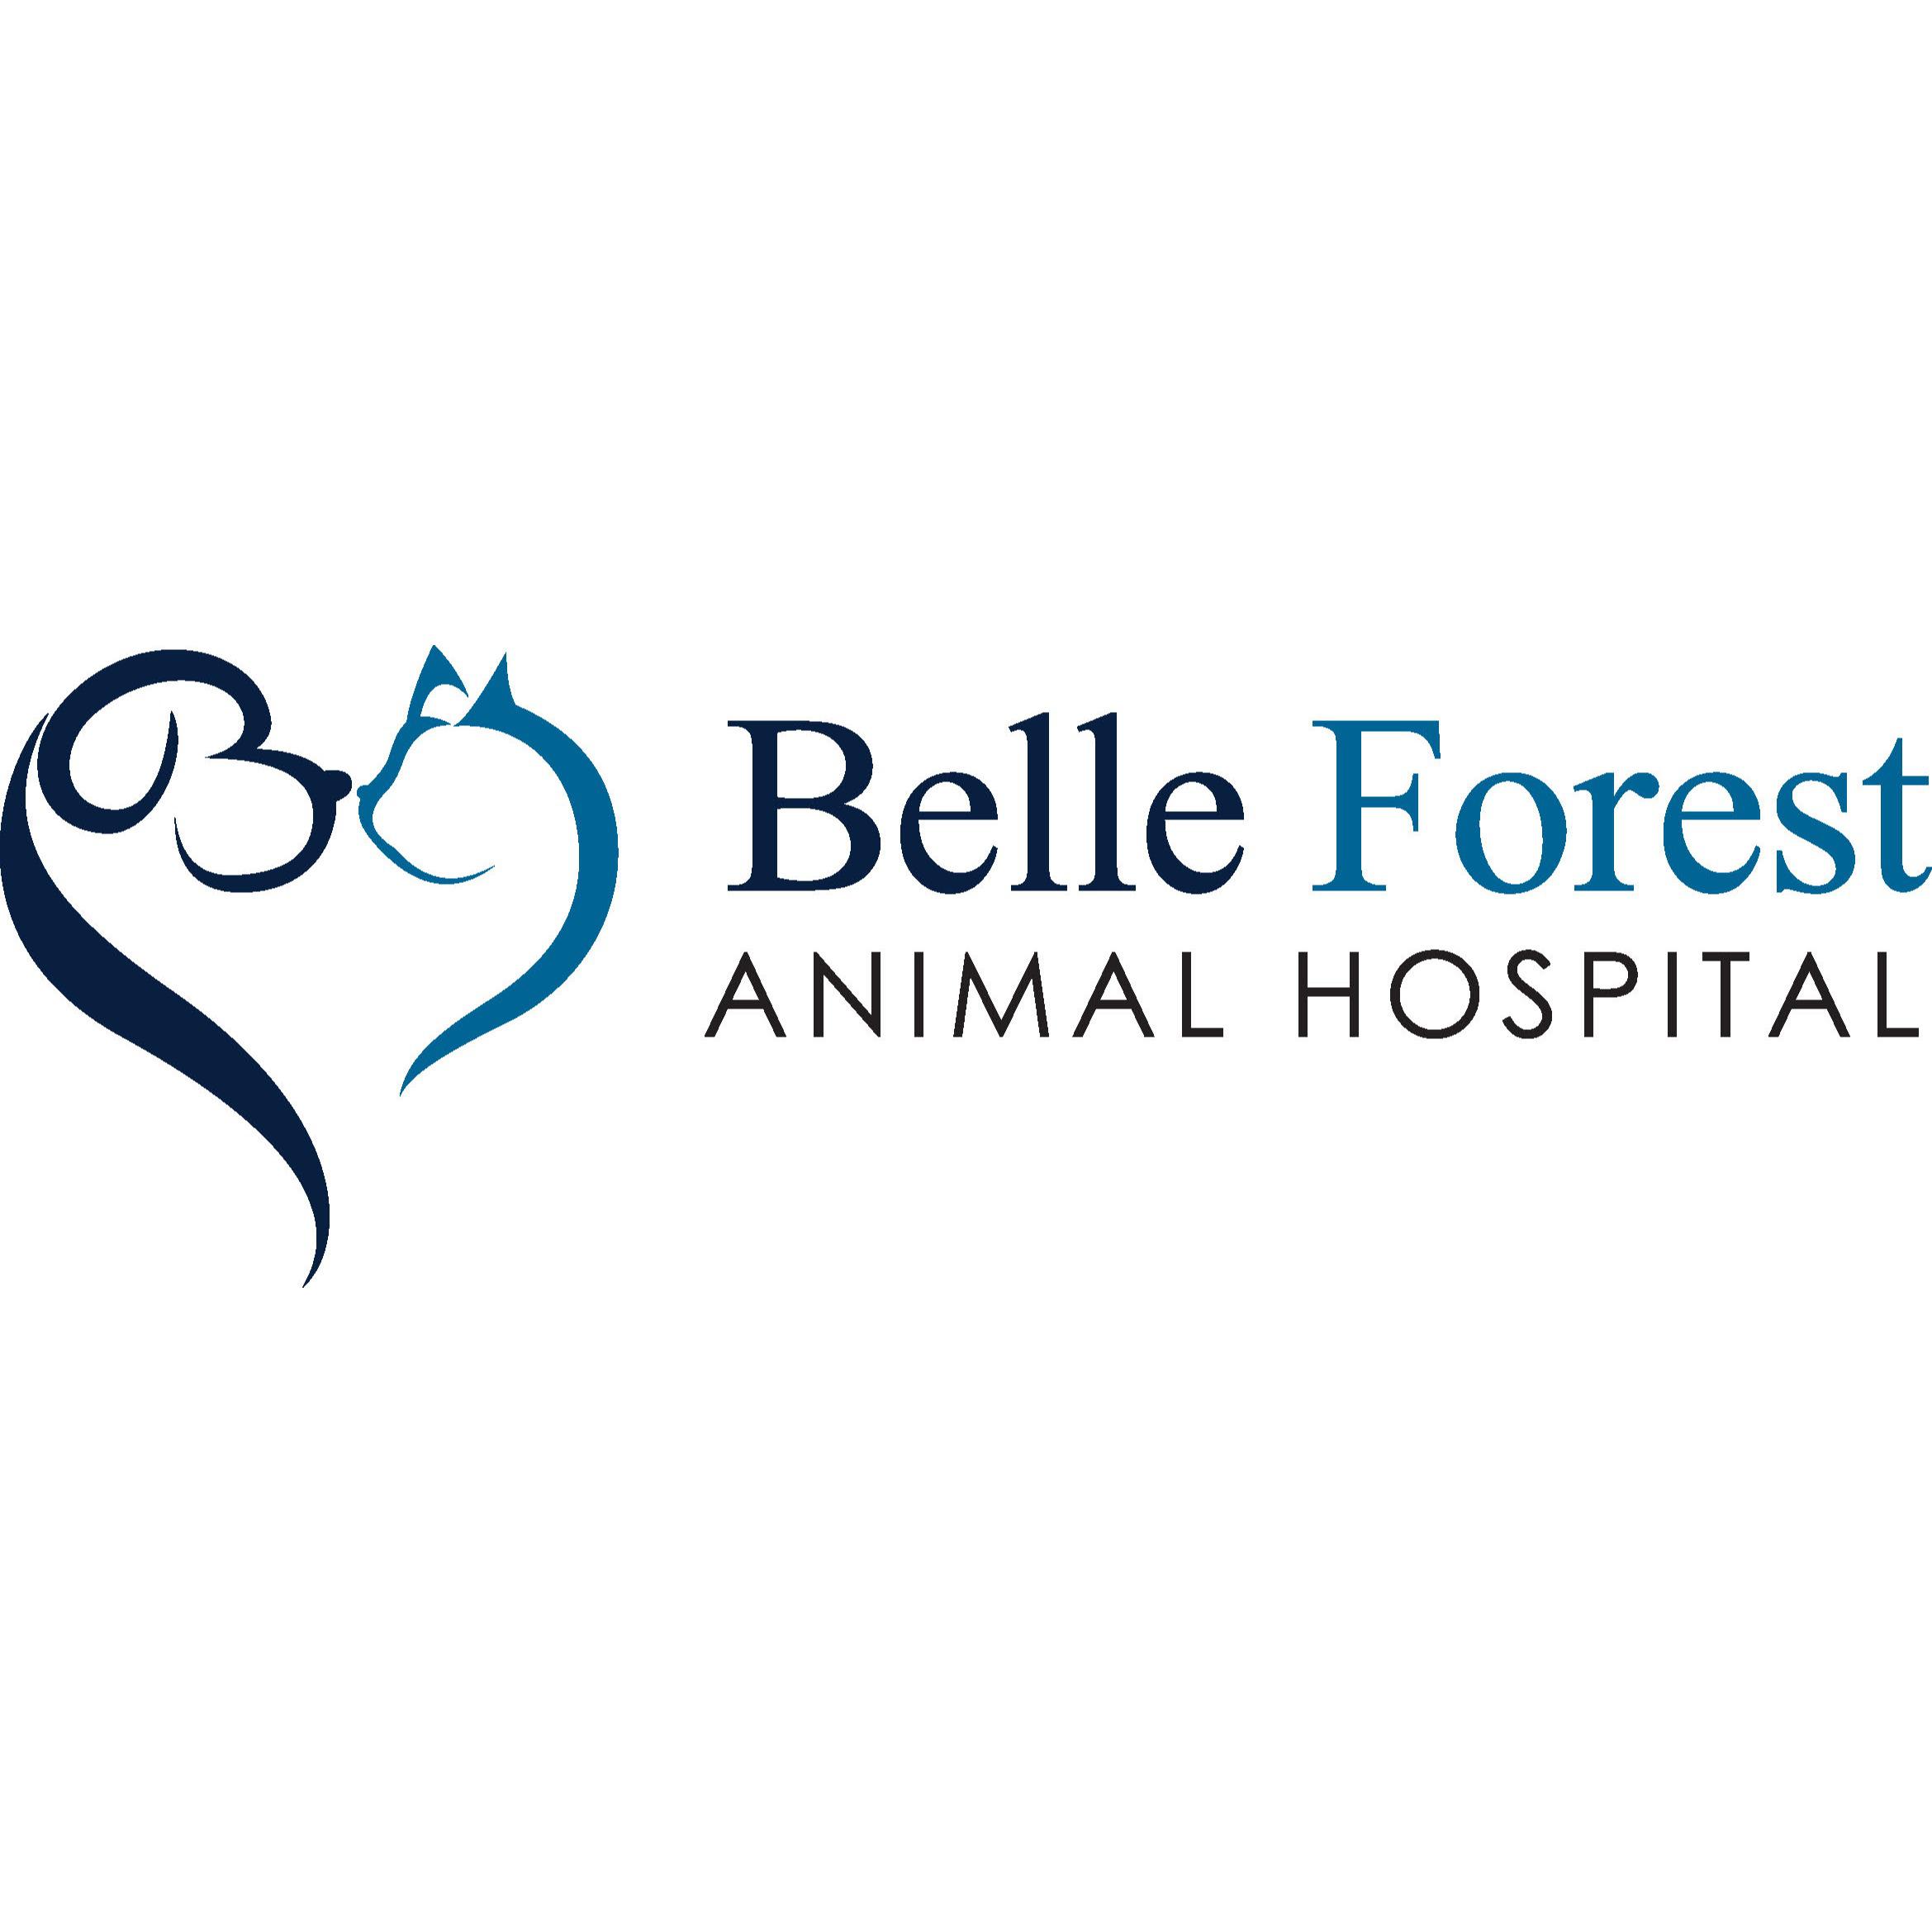 Belle Forest Animal Hospital